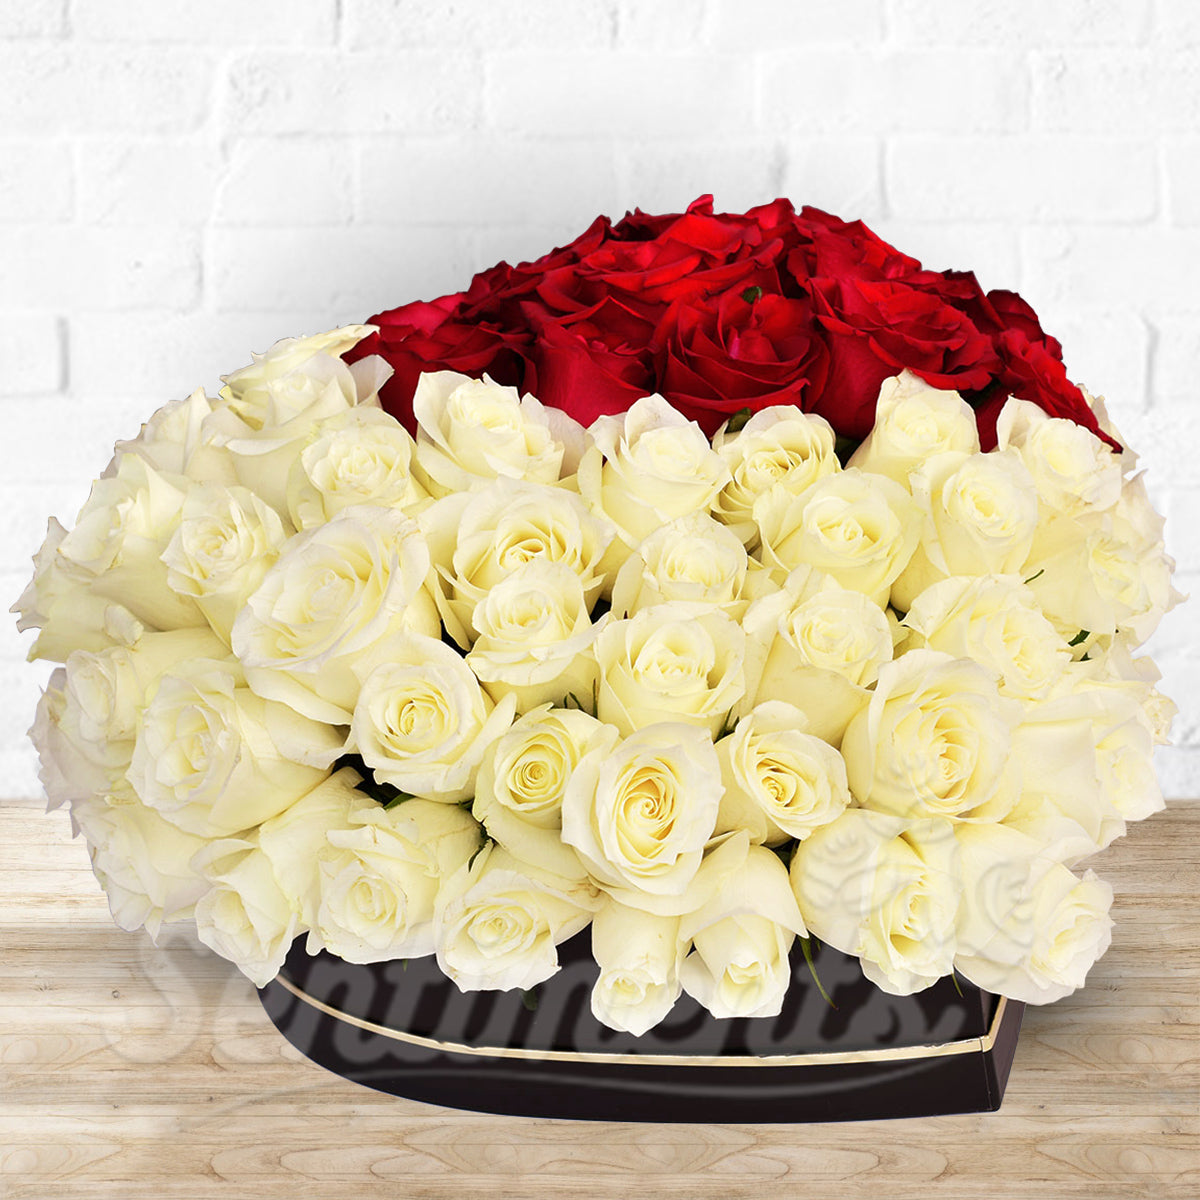 Hearty Red & White Love Roses Flower Arrangement